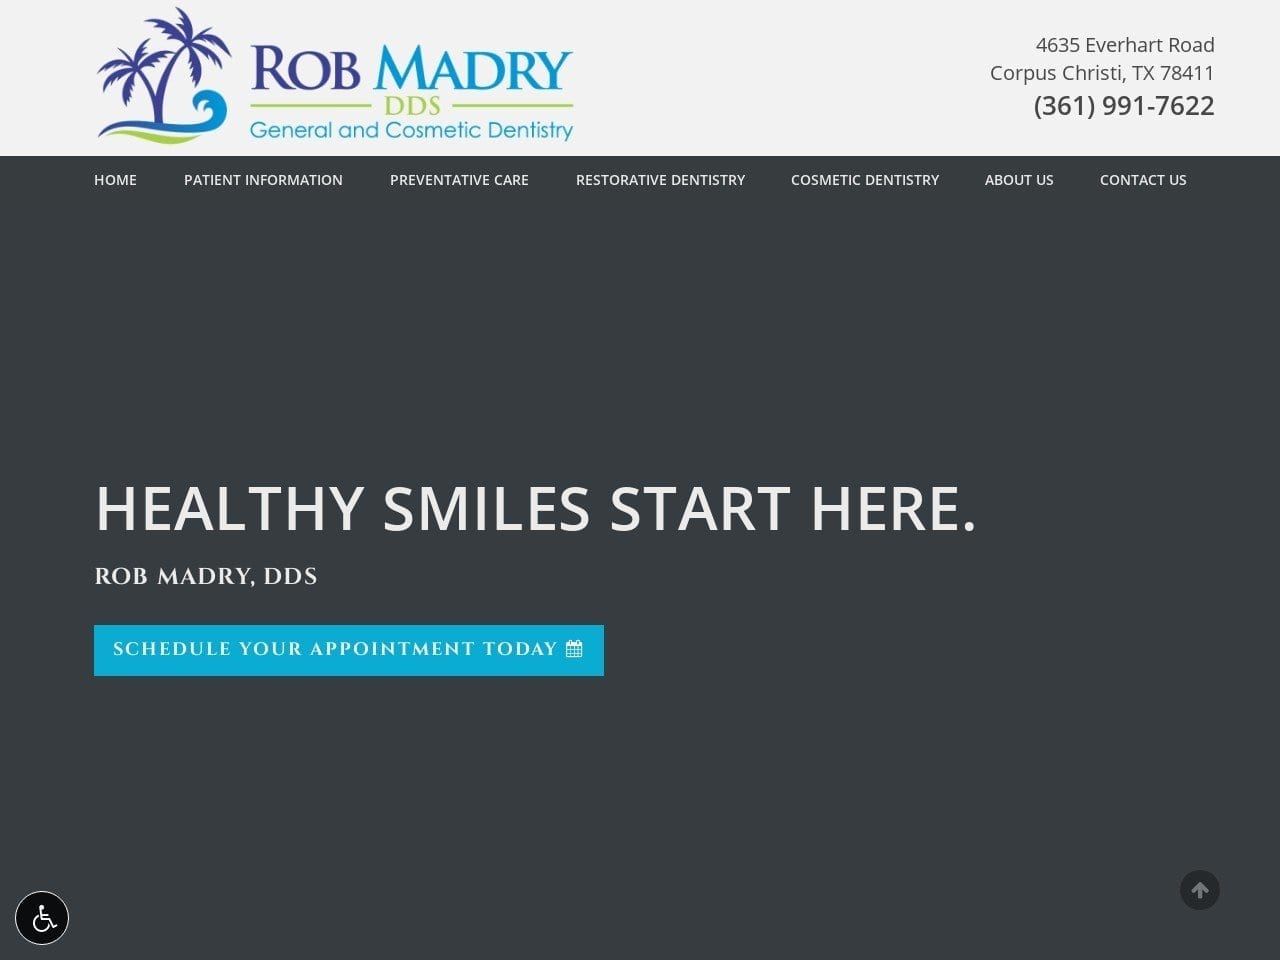 Robert W. Madry III DDS Website Screenshot from madrydental.com